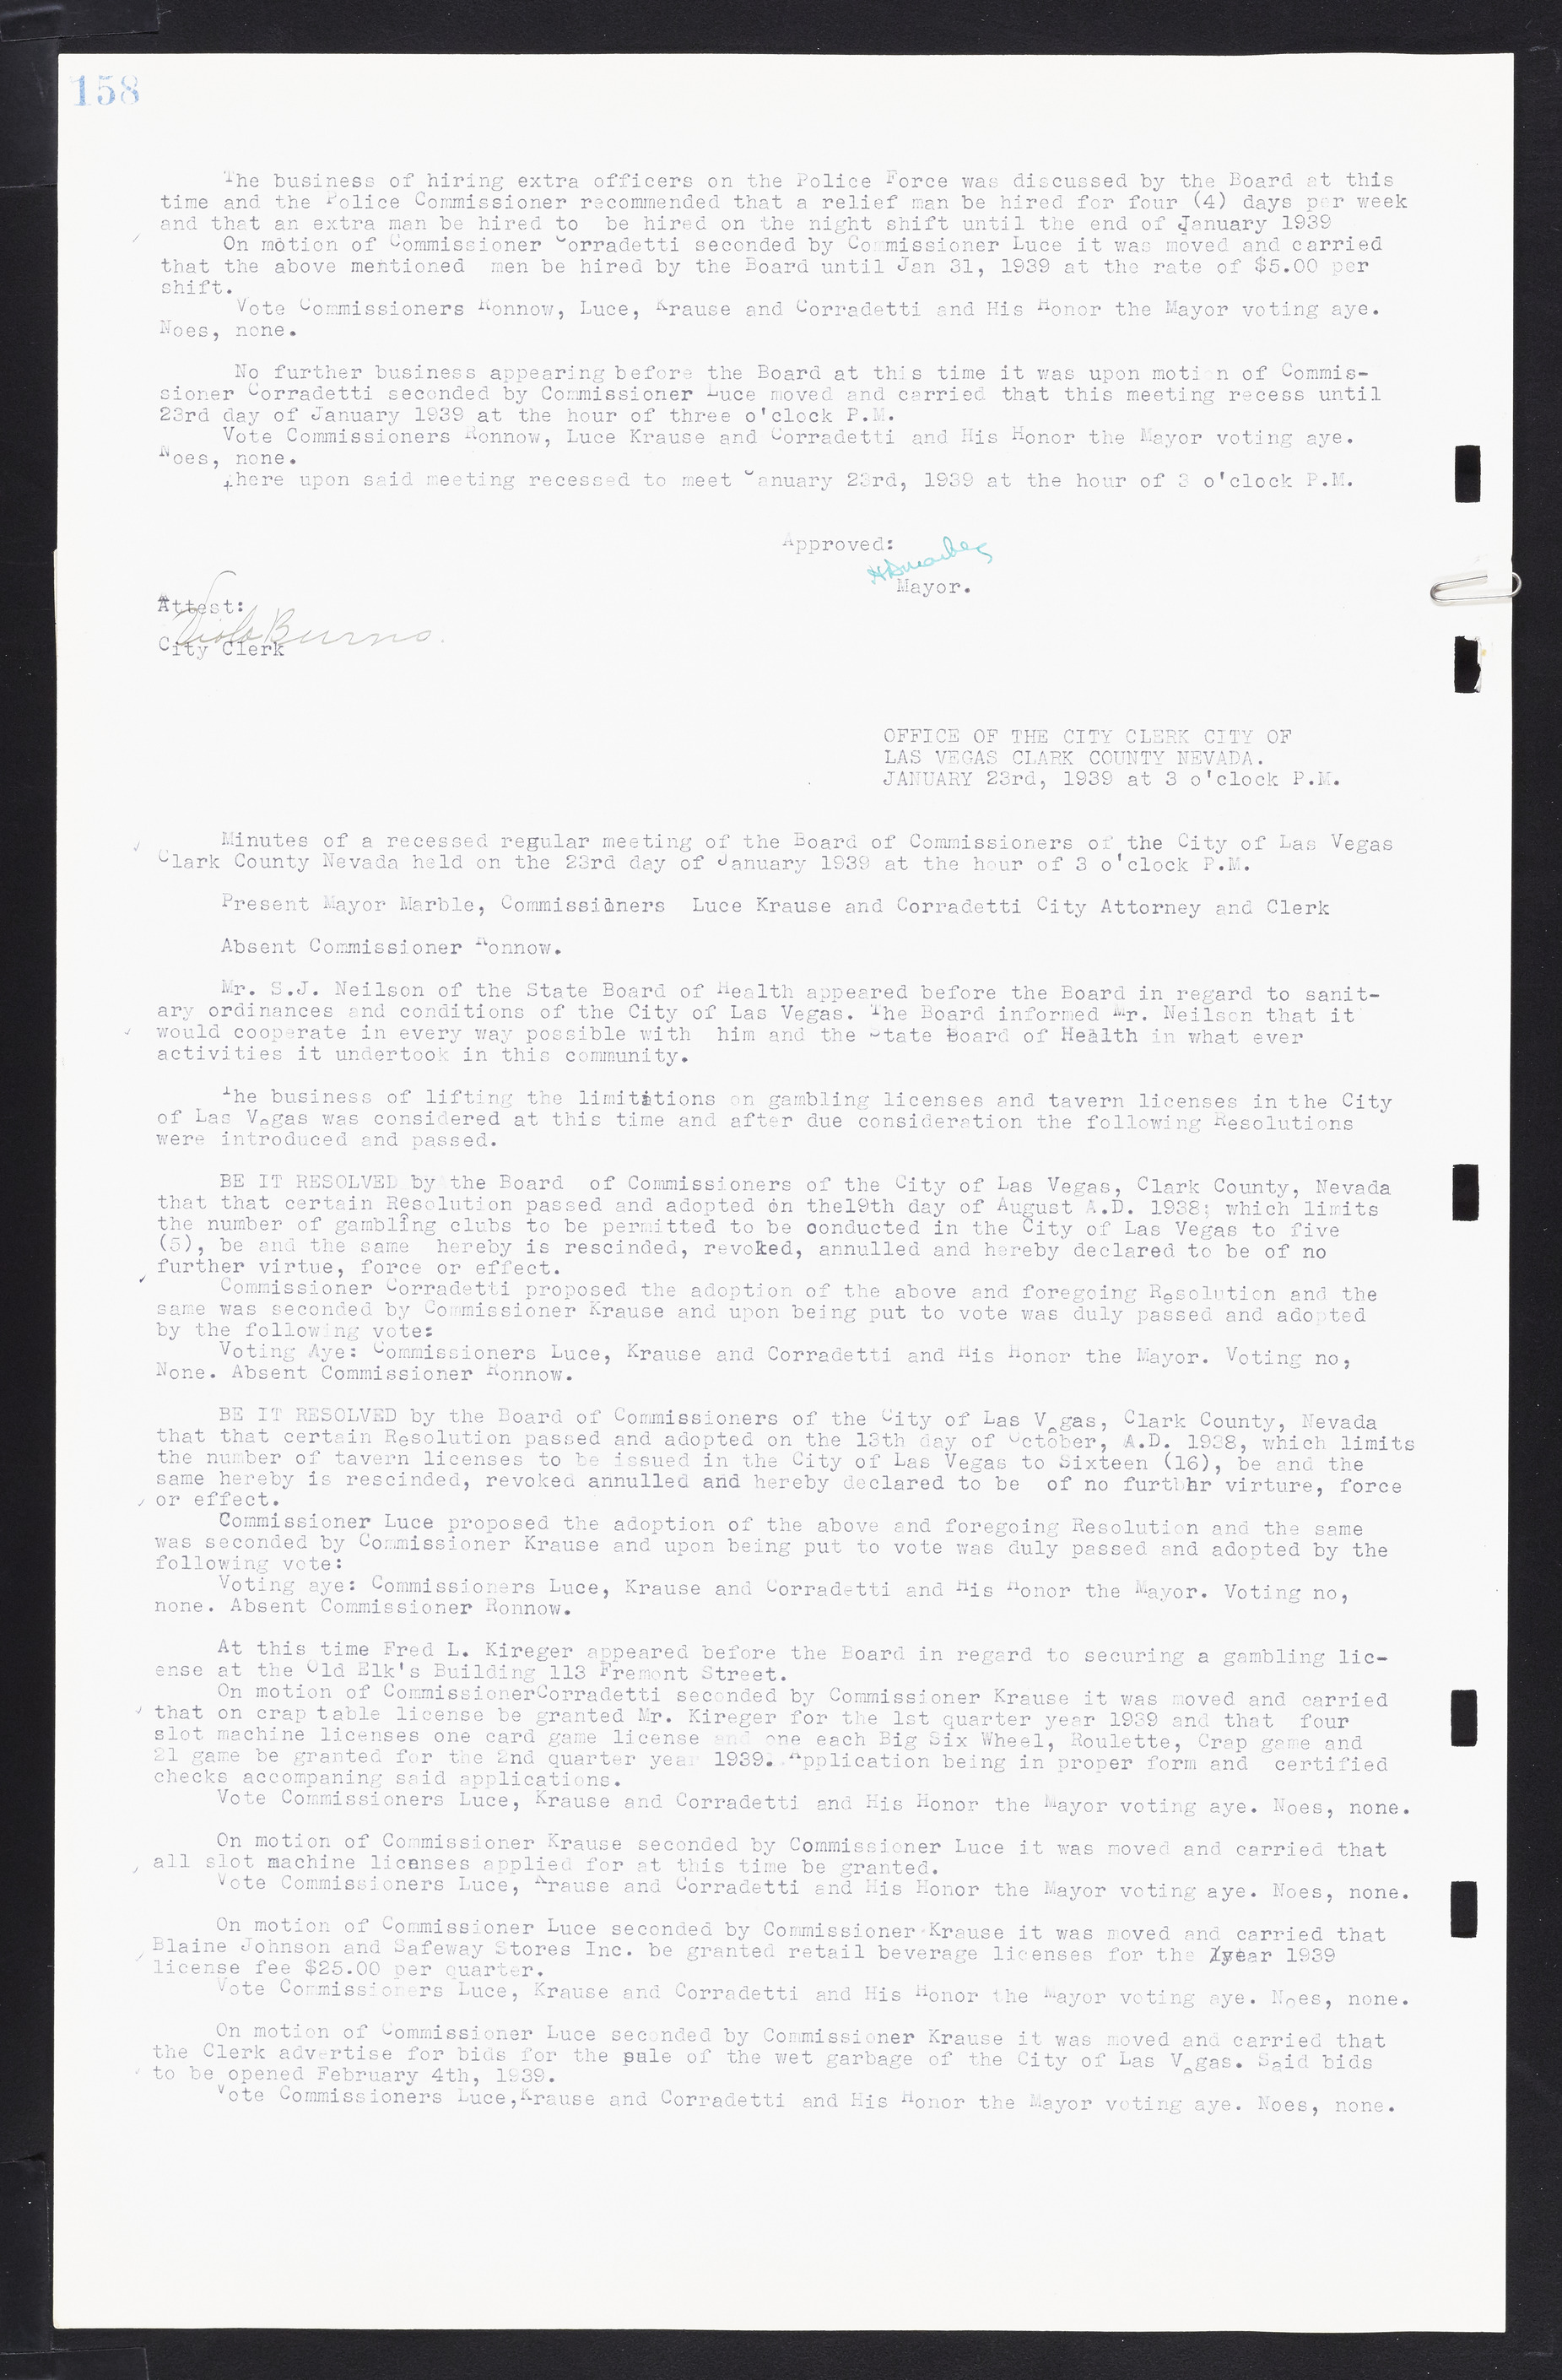 Las Vegas City Commission Minutes, February 17, 1937 to August 4, 1942, lvc000004-174